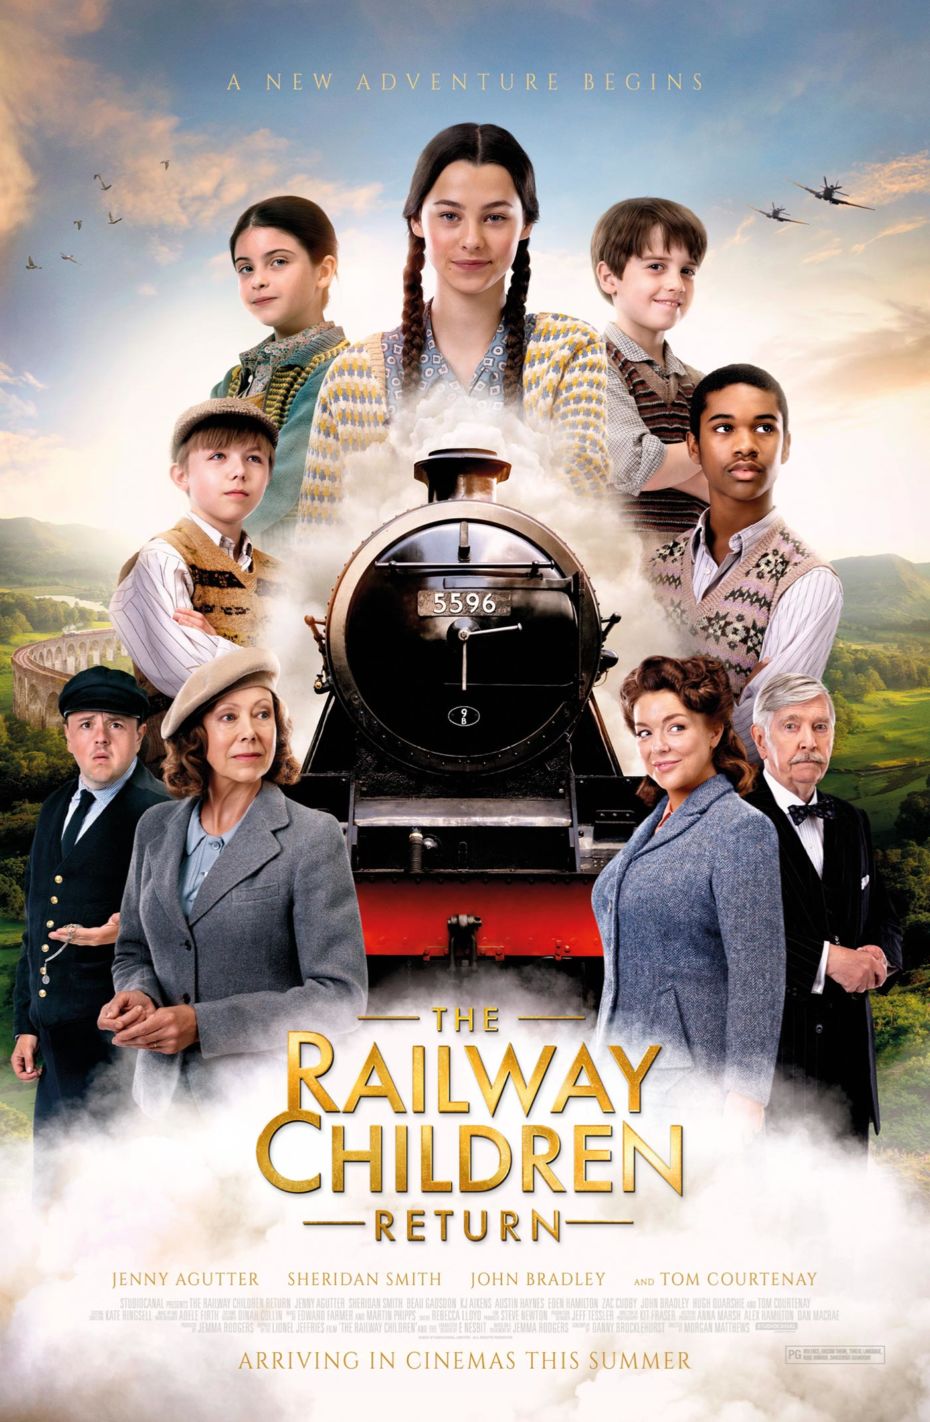 Publicity poster for The Railway Children: Return